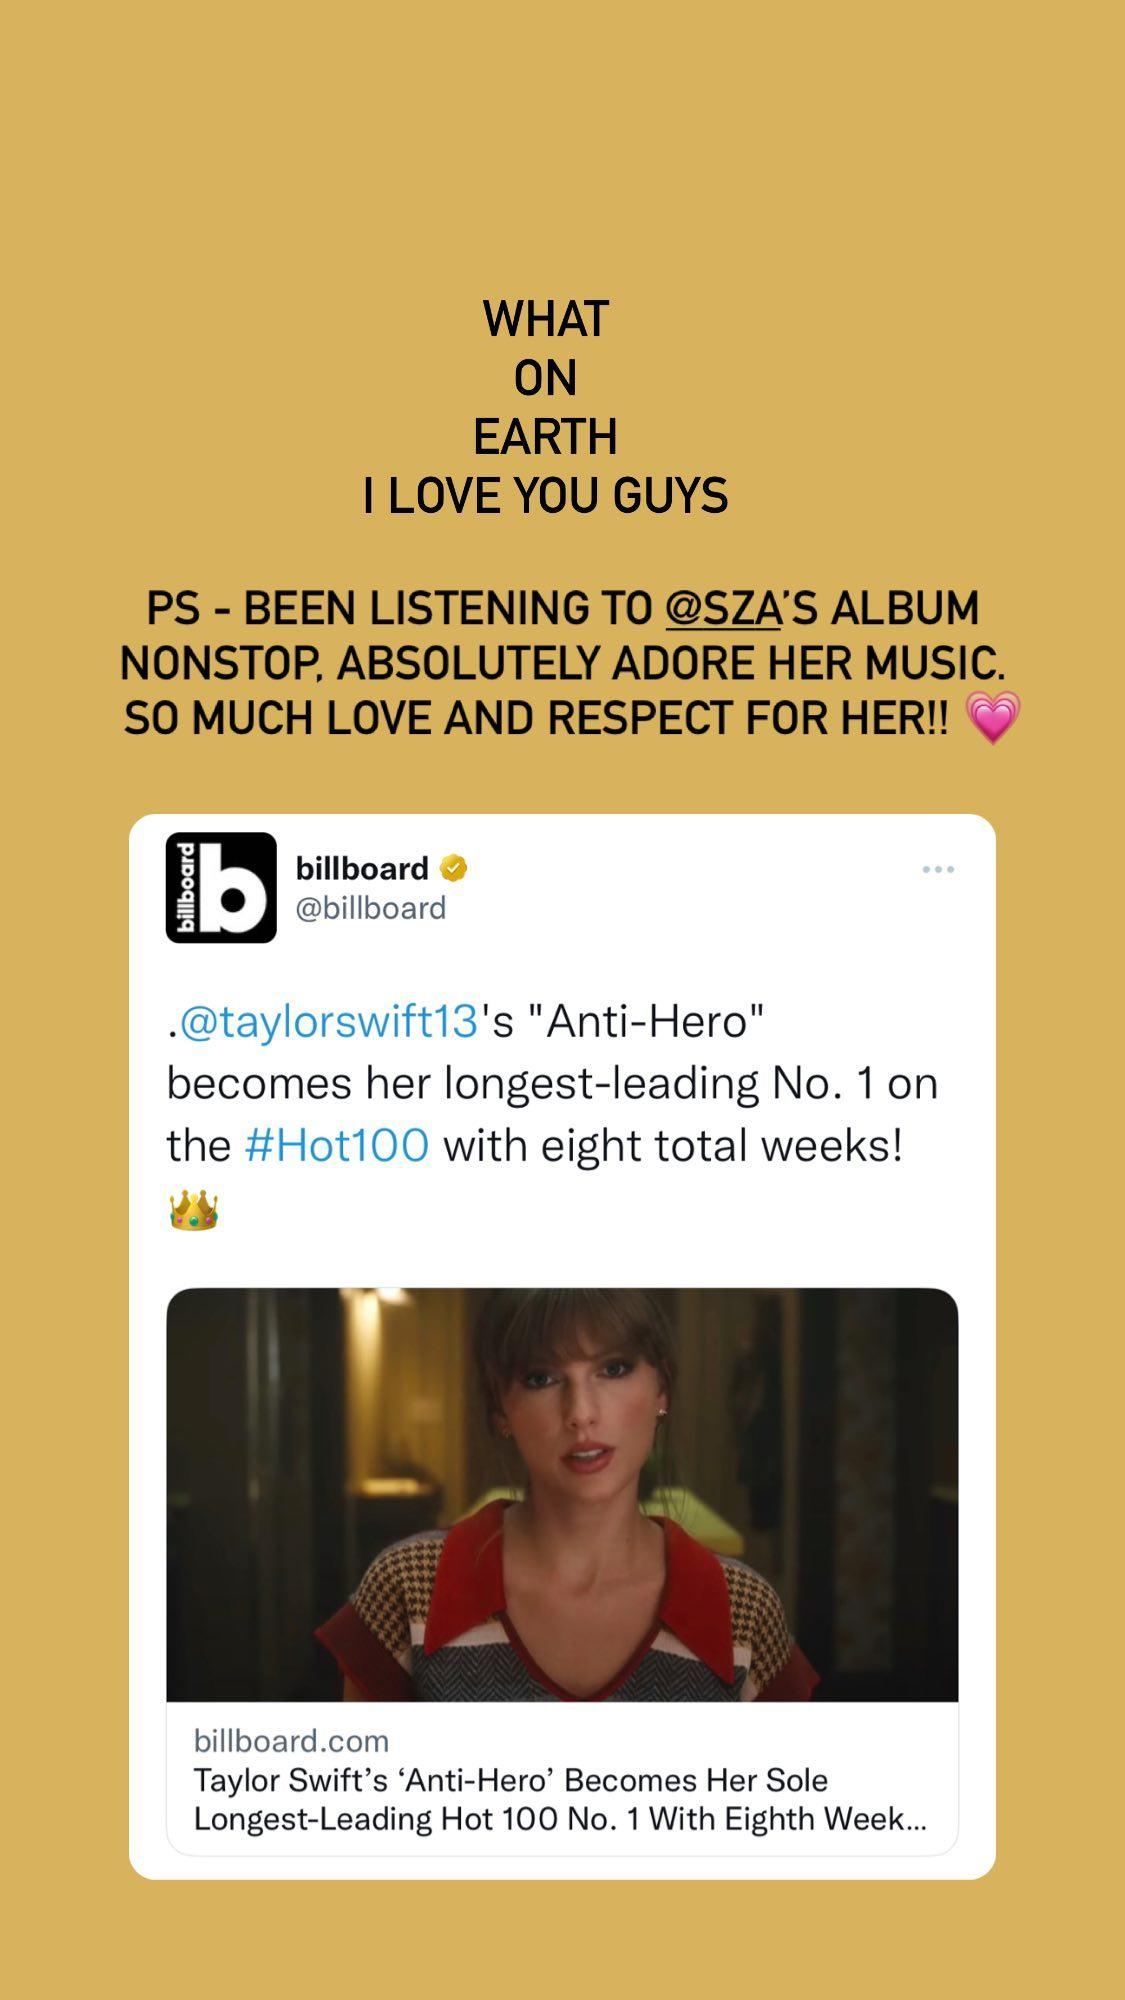 Taylor Swift's "Anti-Hero" Instagram story